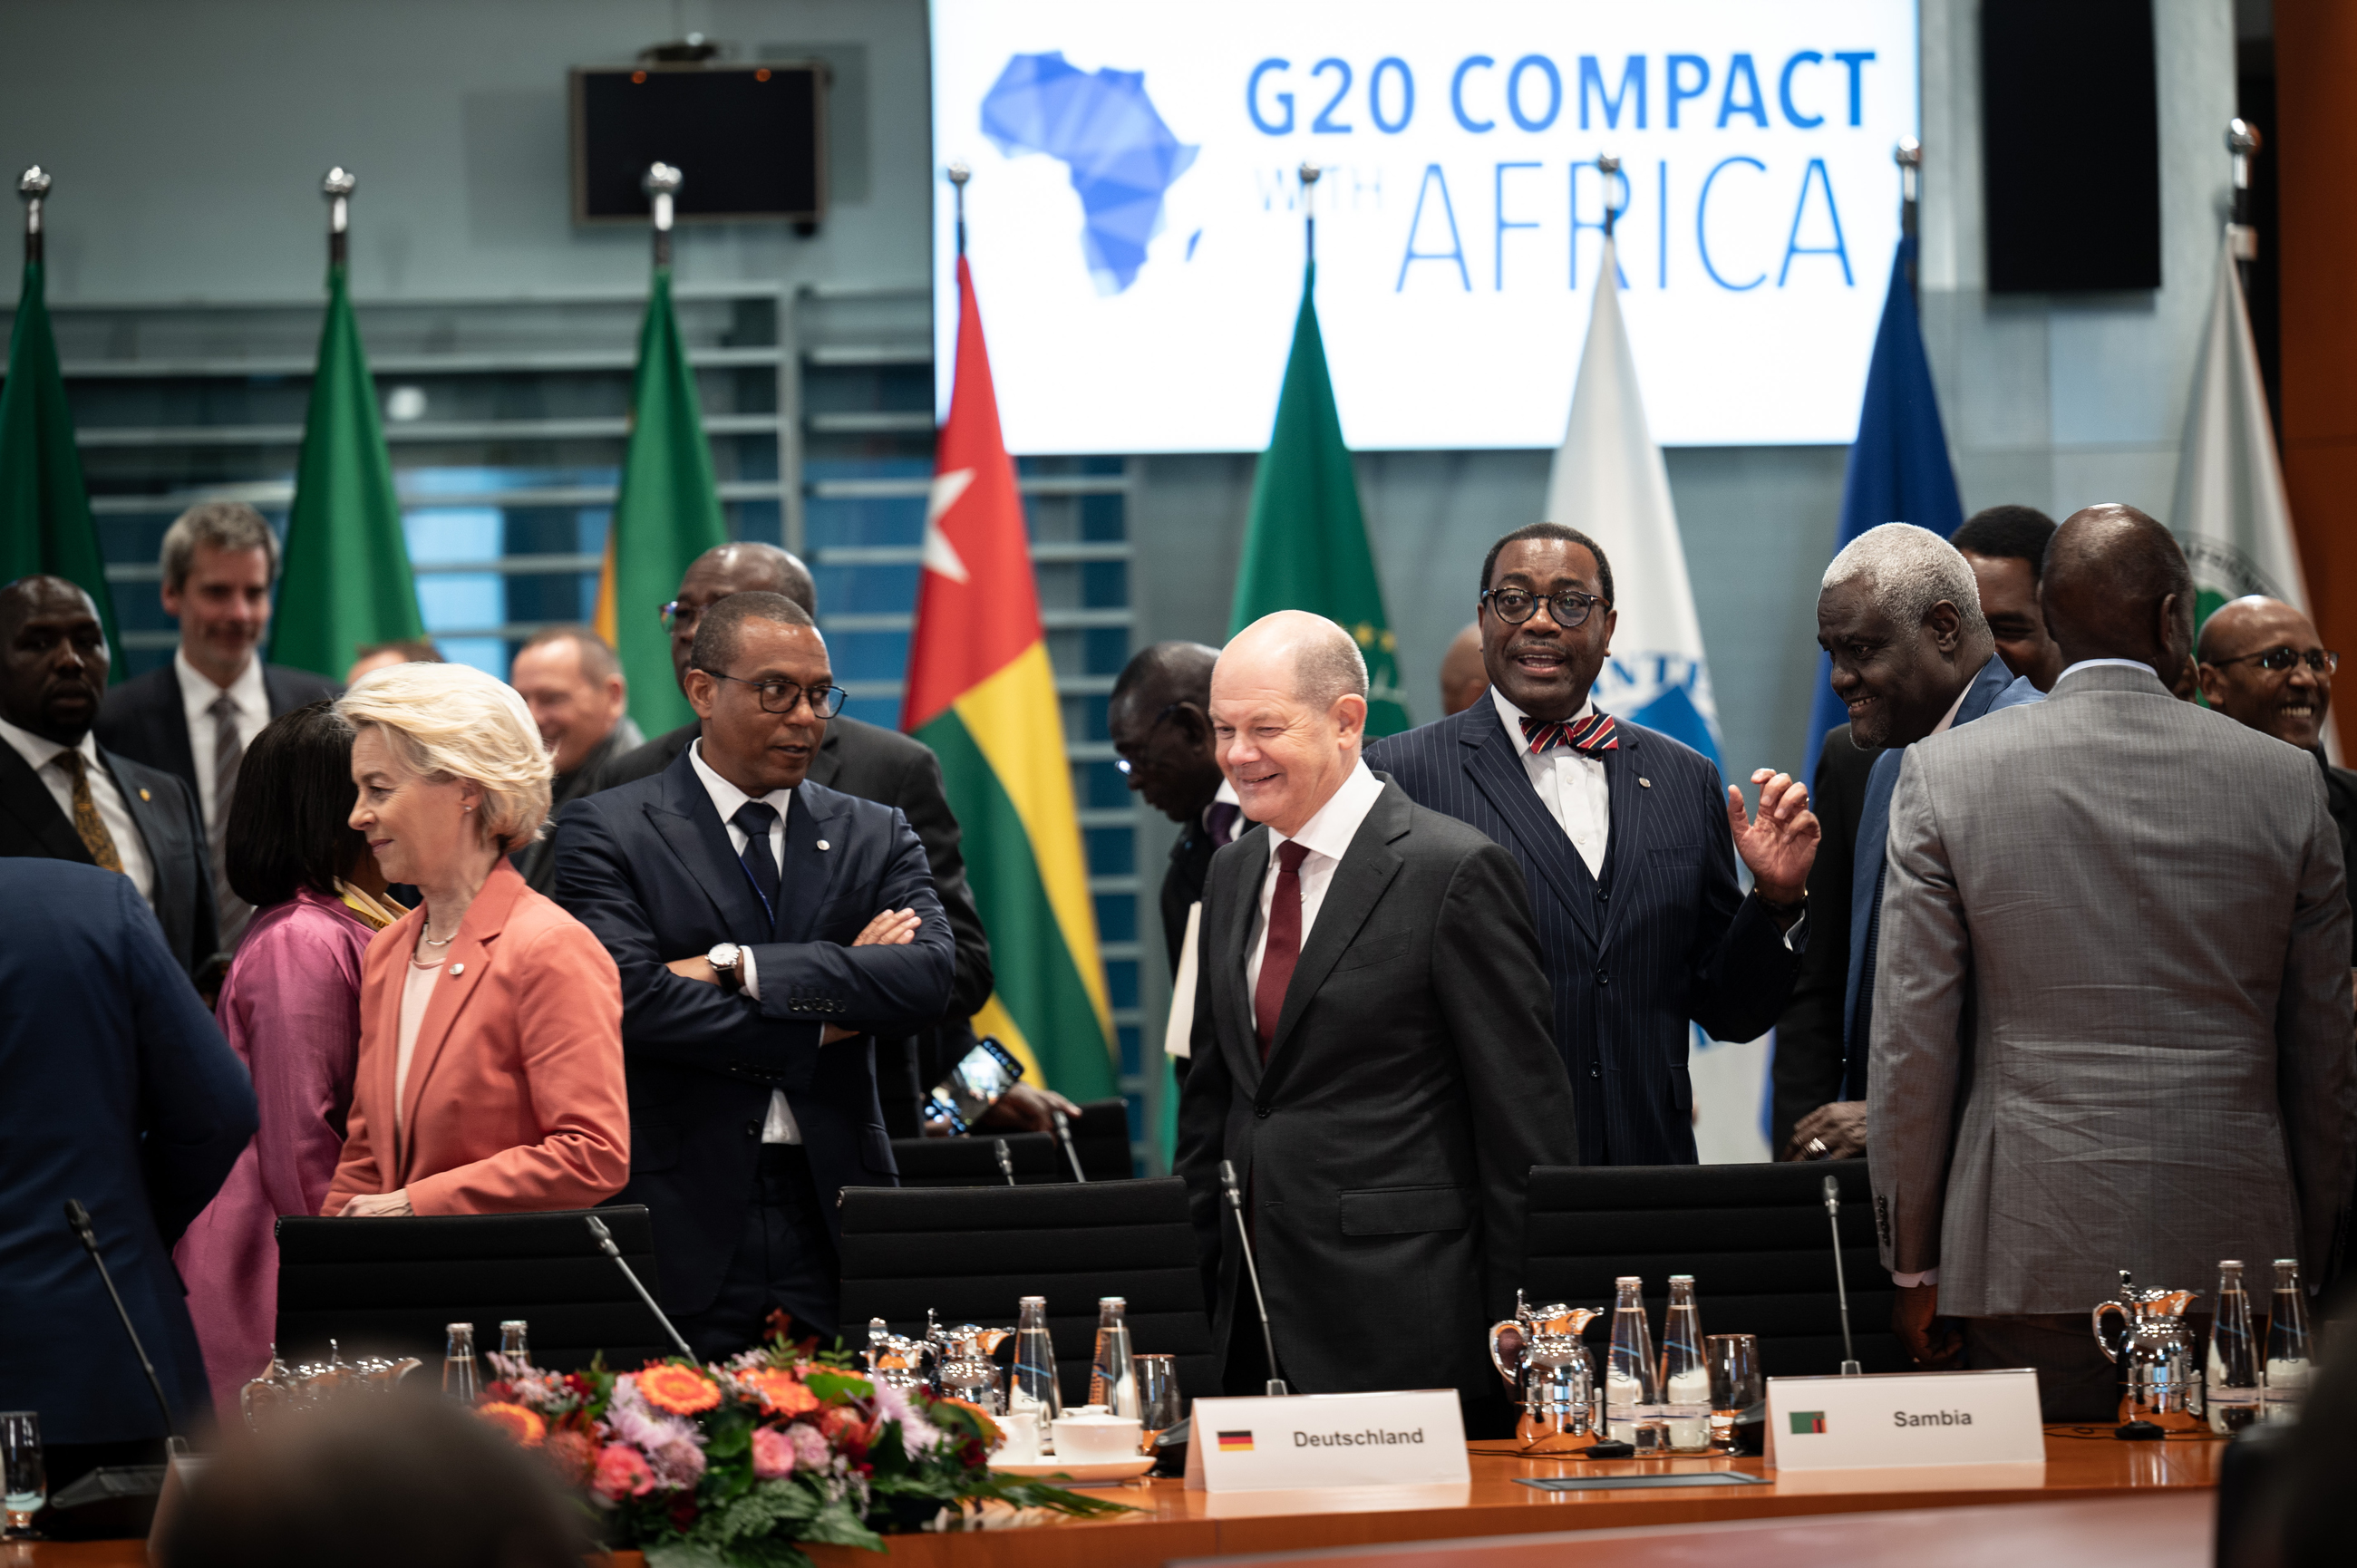 Bundeskanzler Olaf Scholz bei der G20-Konferenz "Compact with Africa".